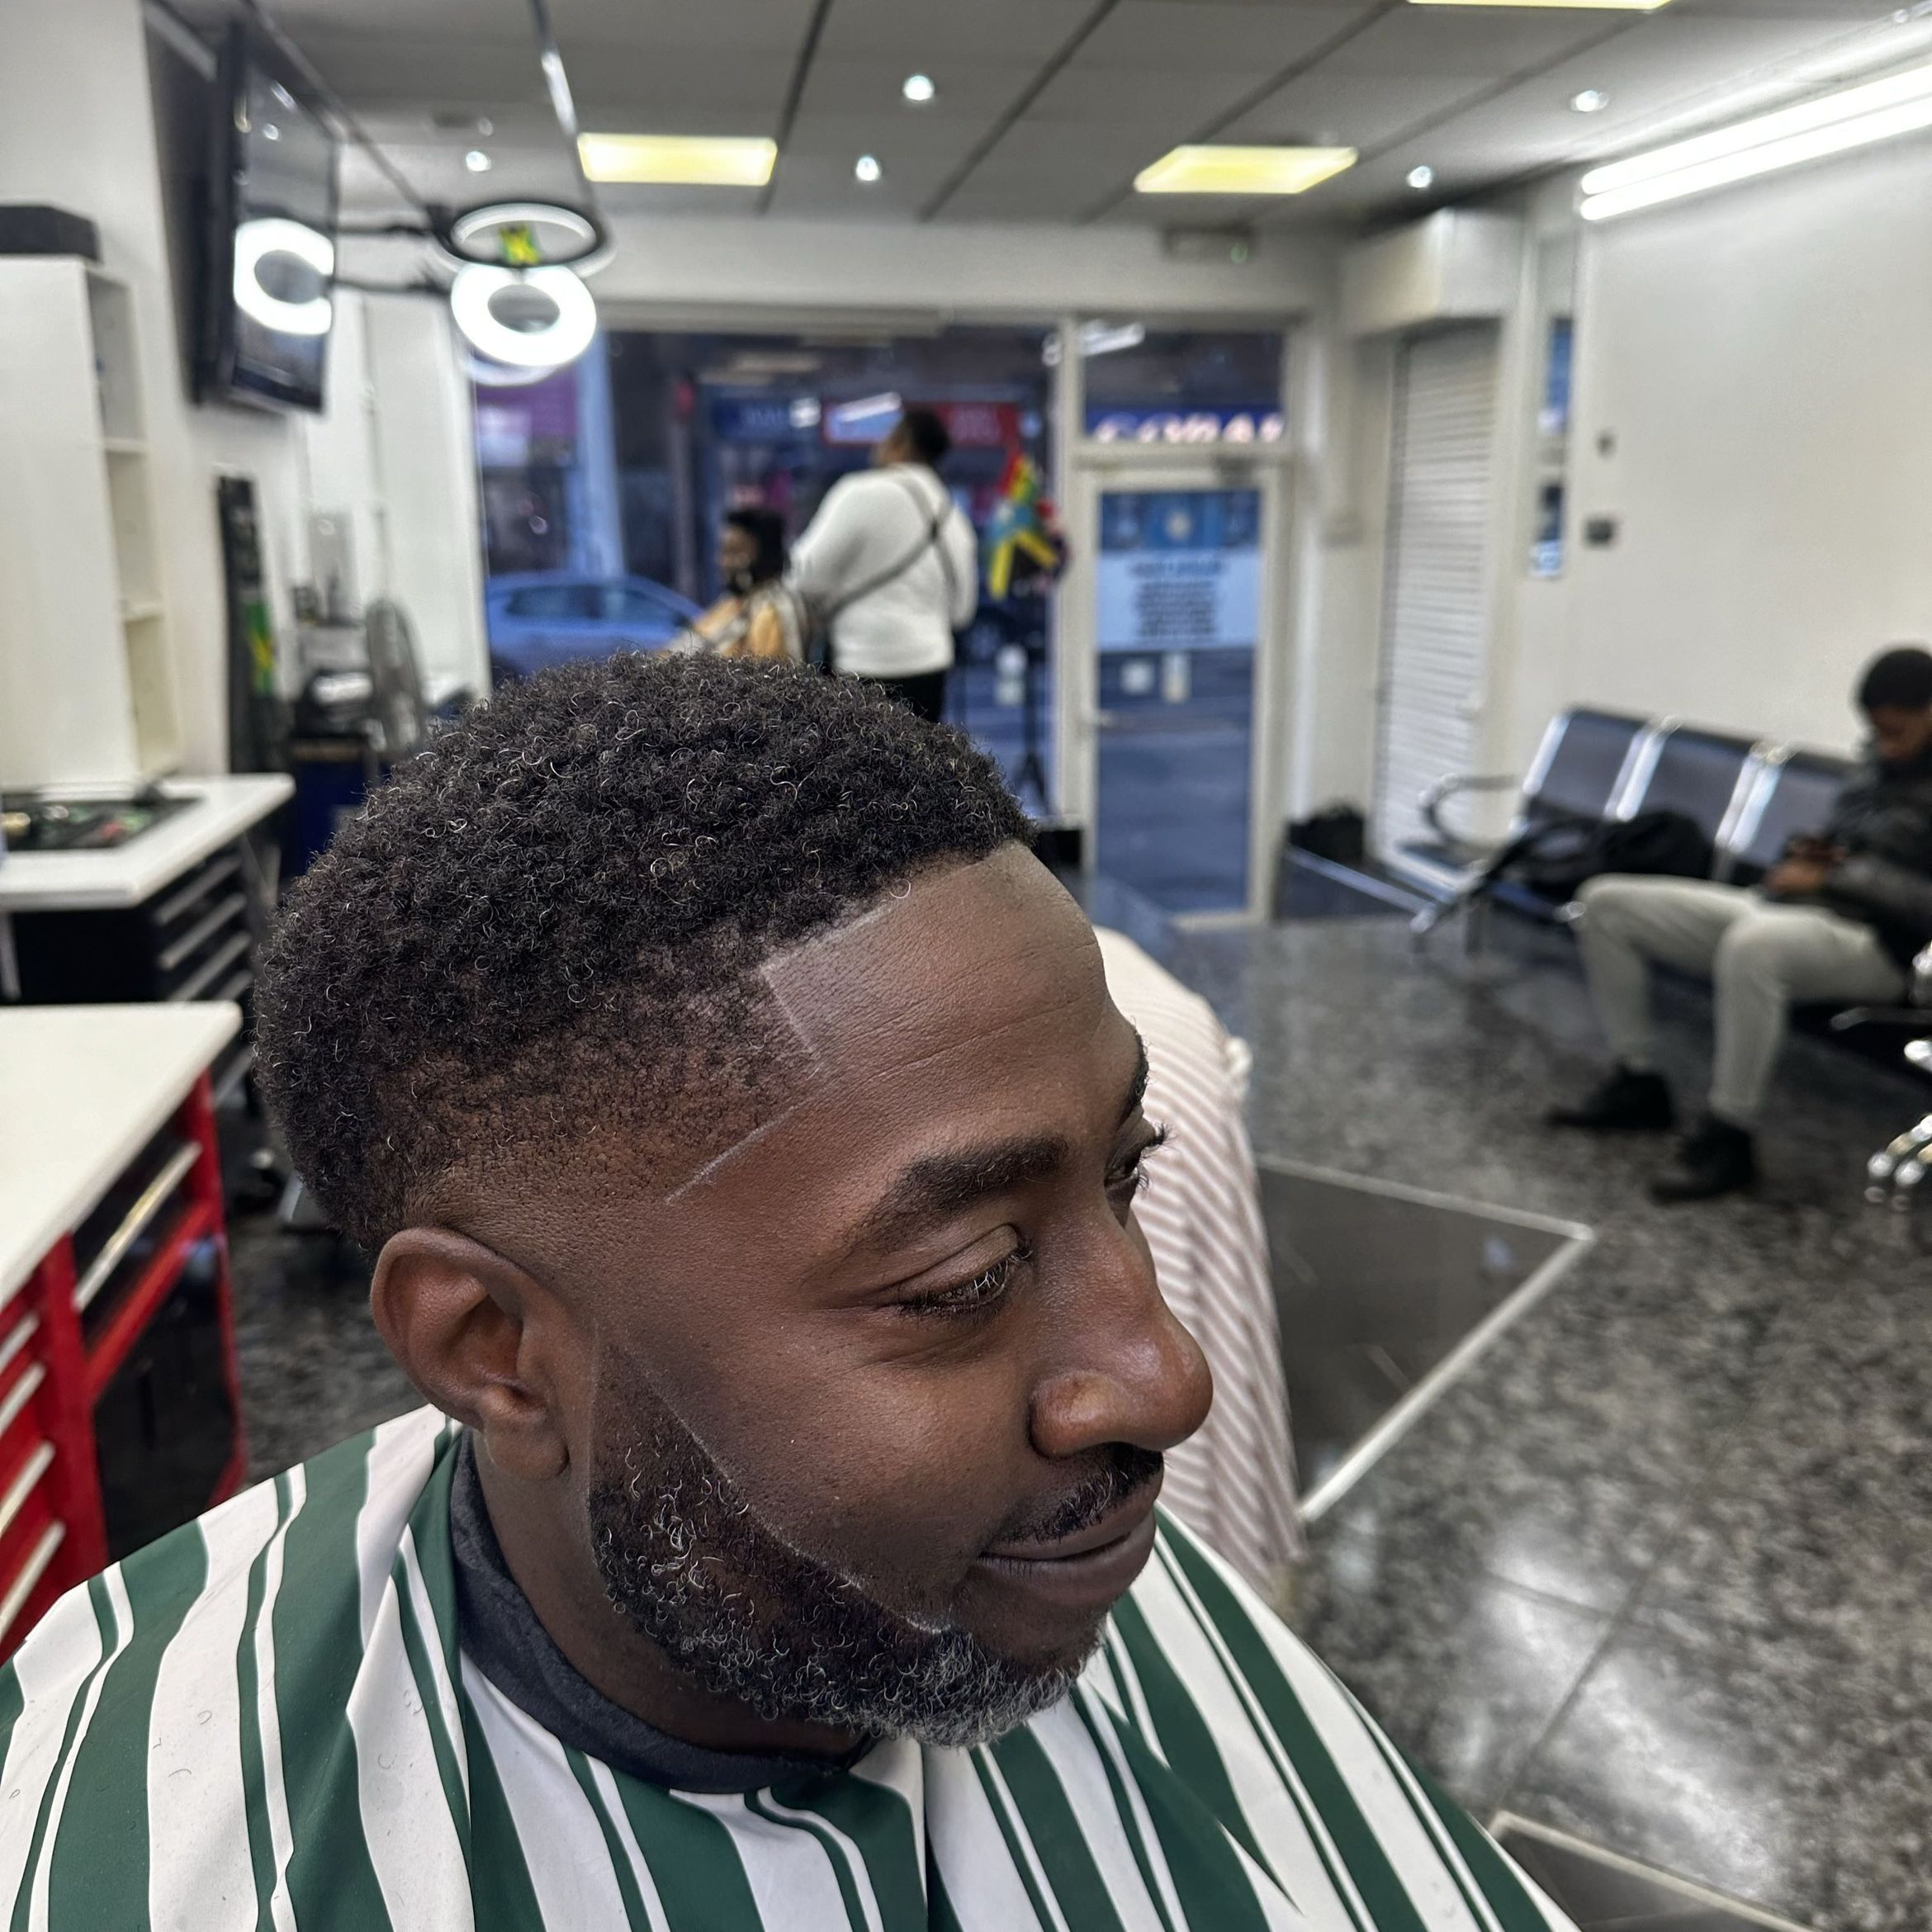 Men haircut 18 & over portfolio